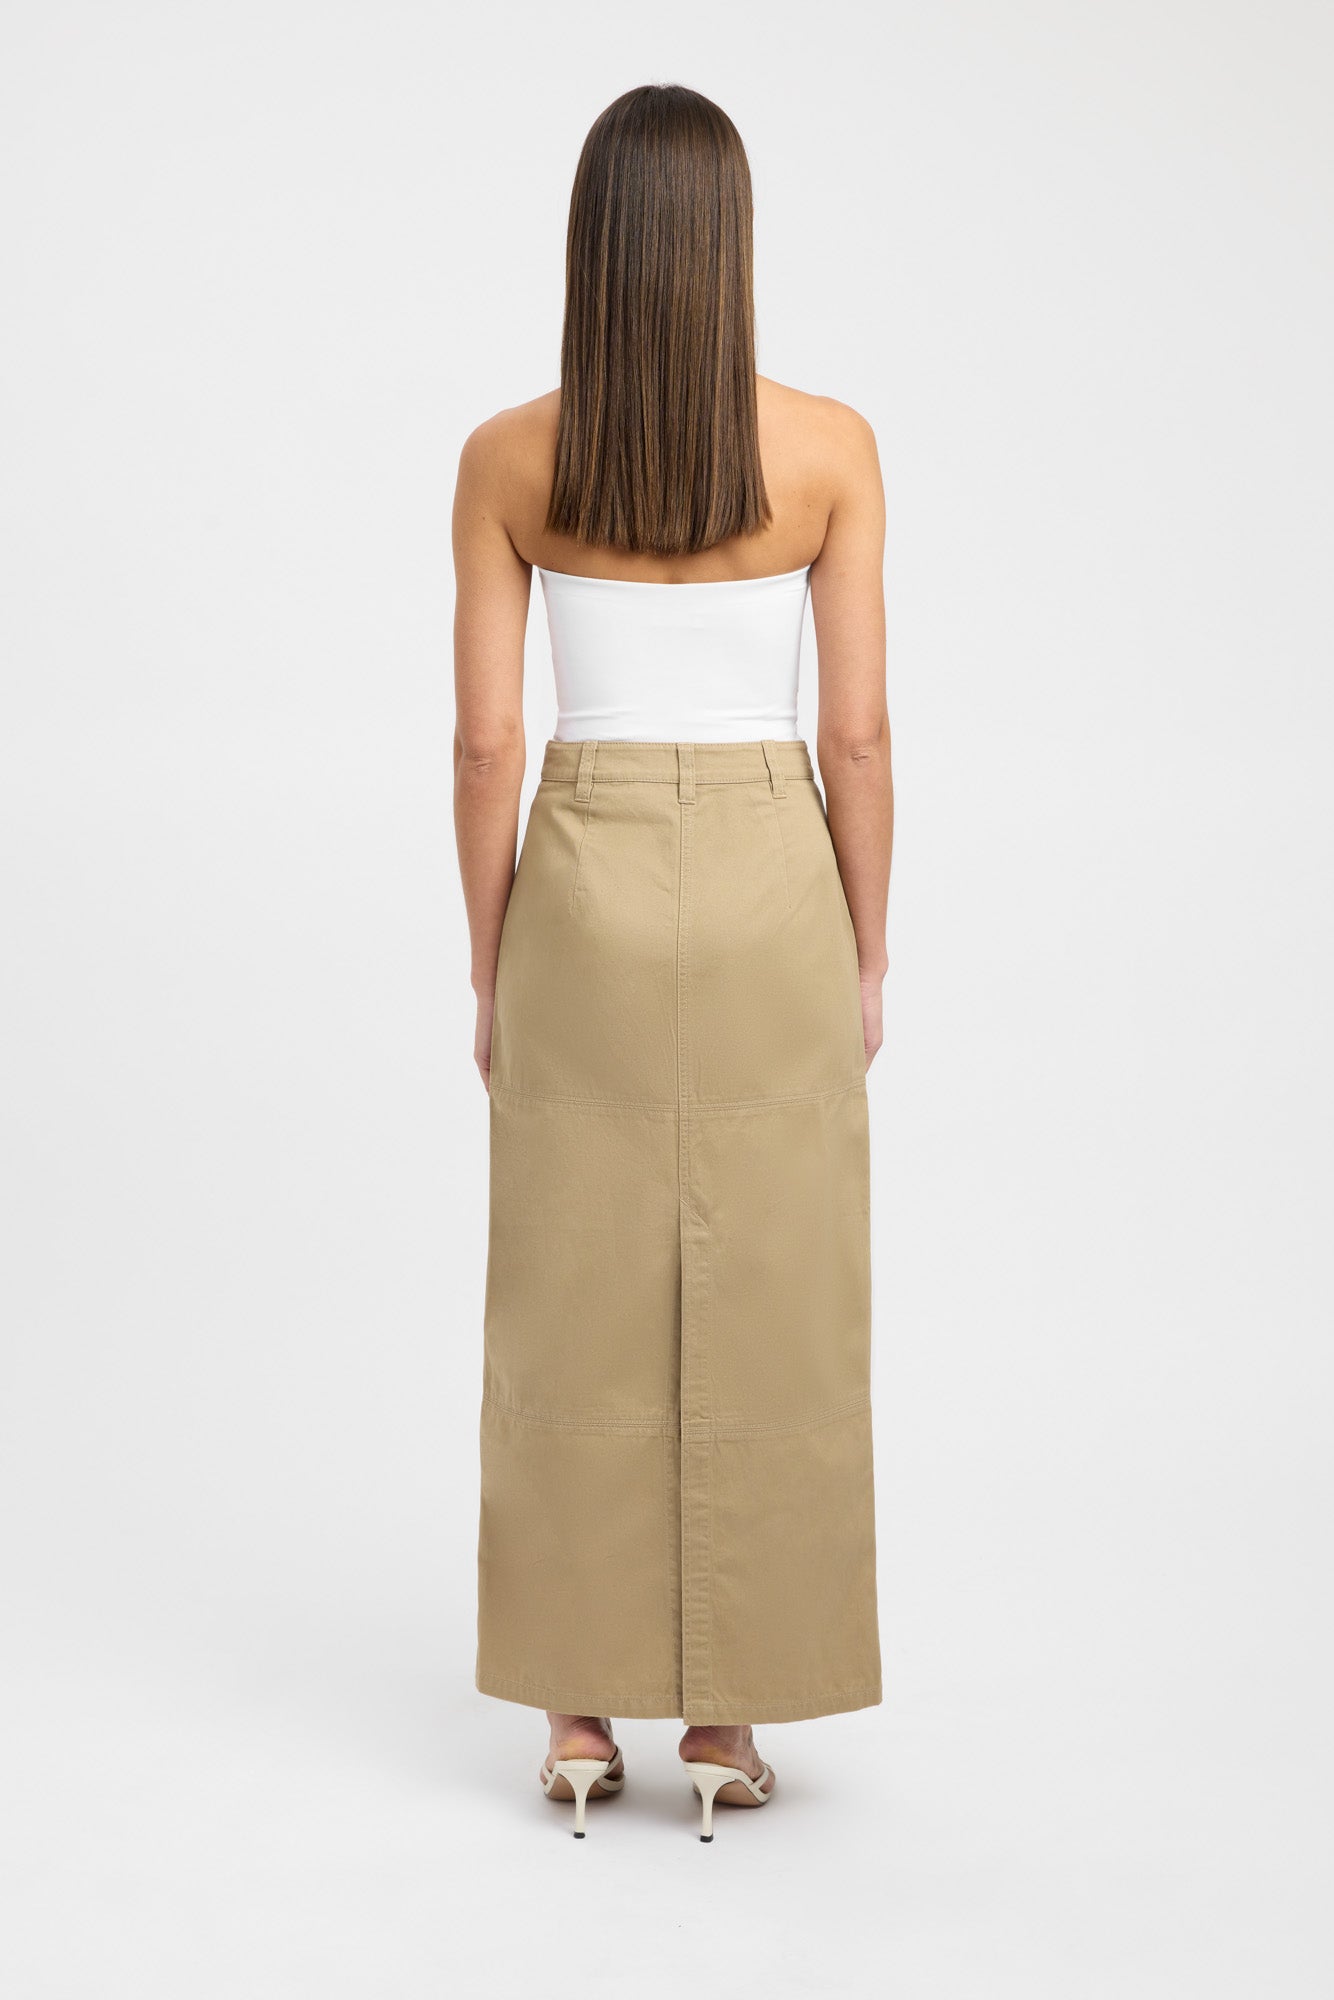 Buy Sawyer Skirt Camel Online | Australia